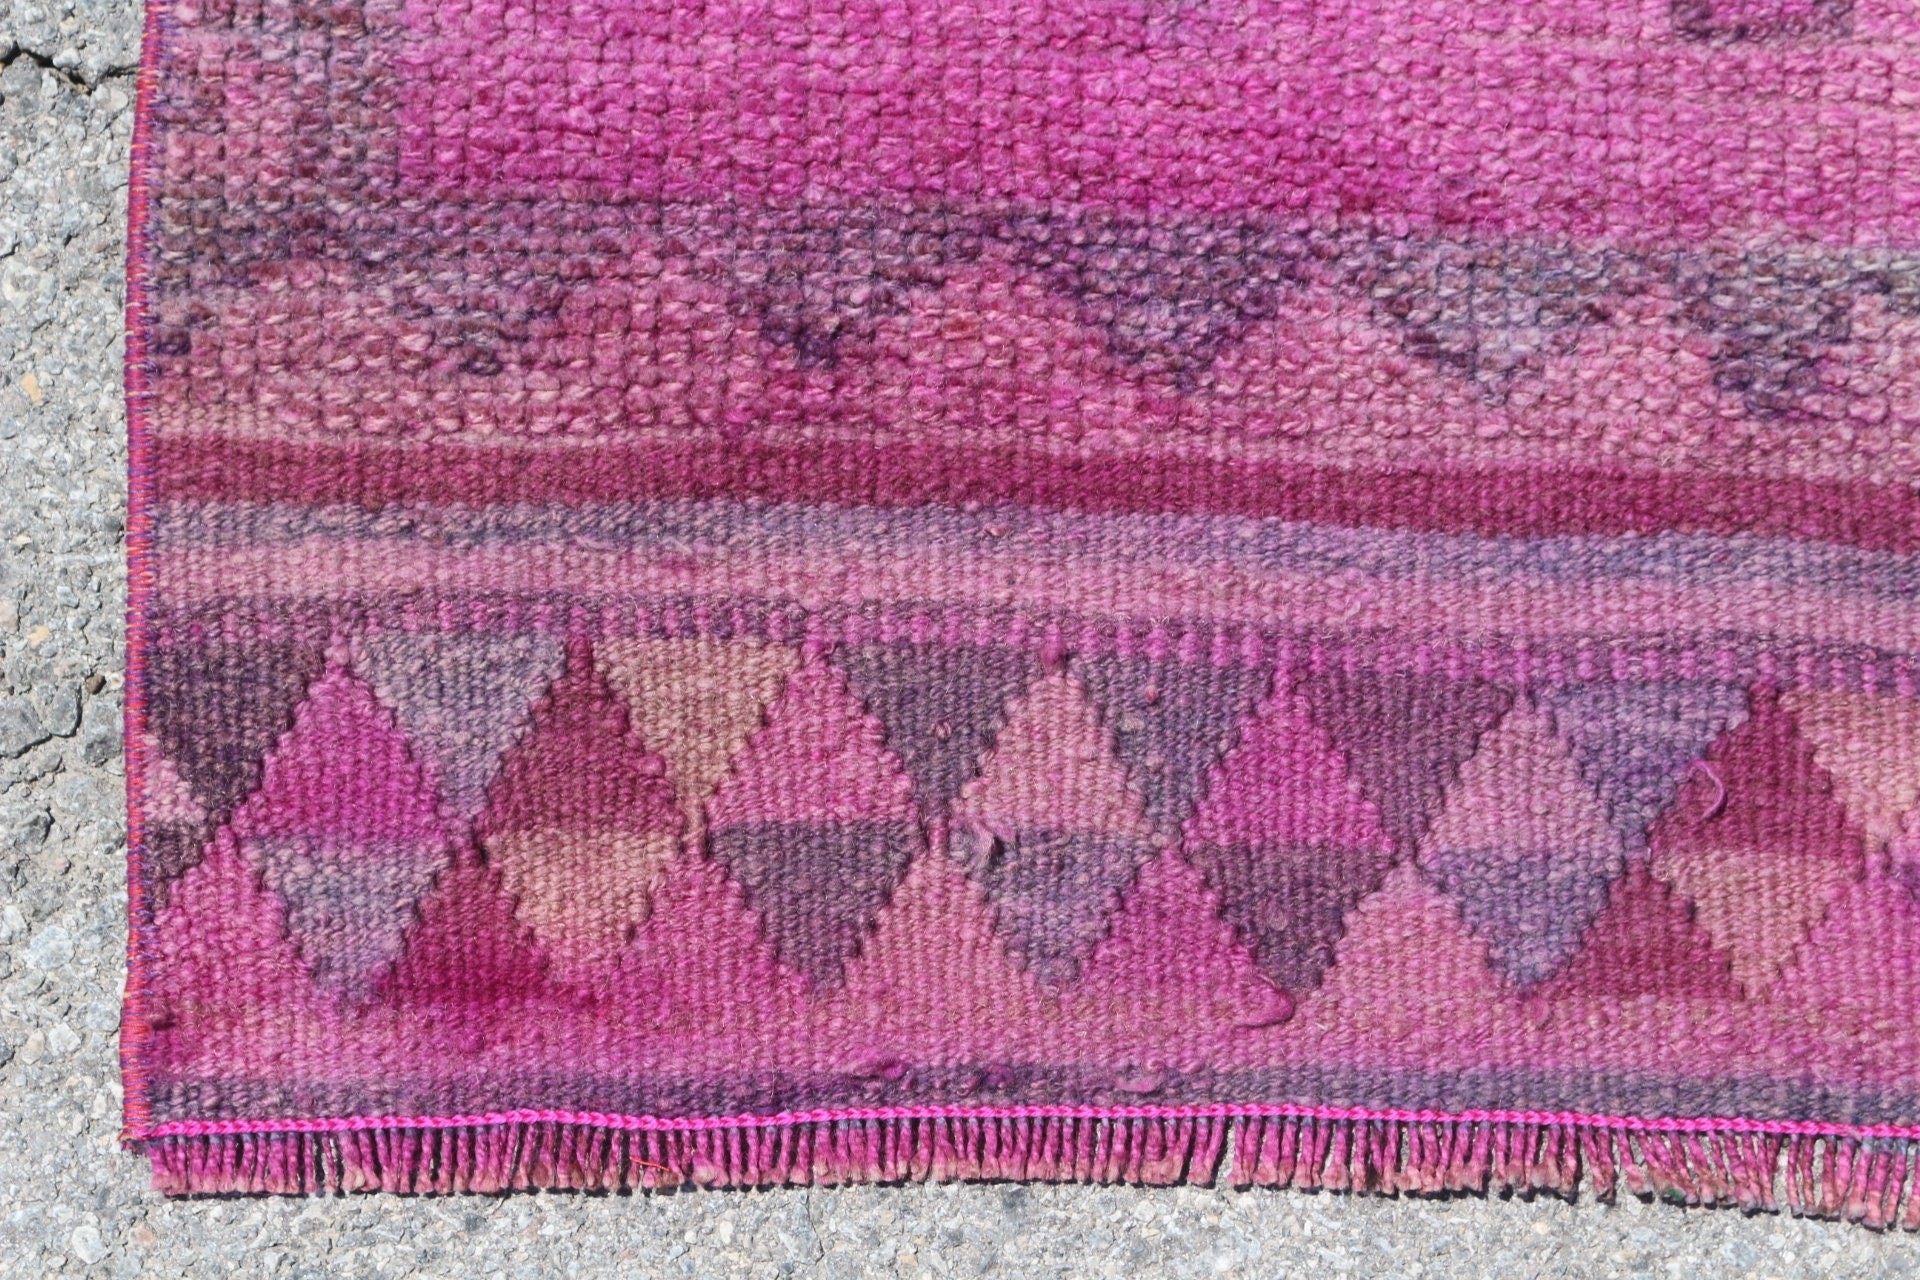 Anatolian Rug, Turkish Rugs, Kitchen Rug, Cool Rugs, Pink  2.8x12 ft Runner Rugs, Organic Rug, Vintage Rugs, Rugs for Corridor